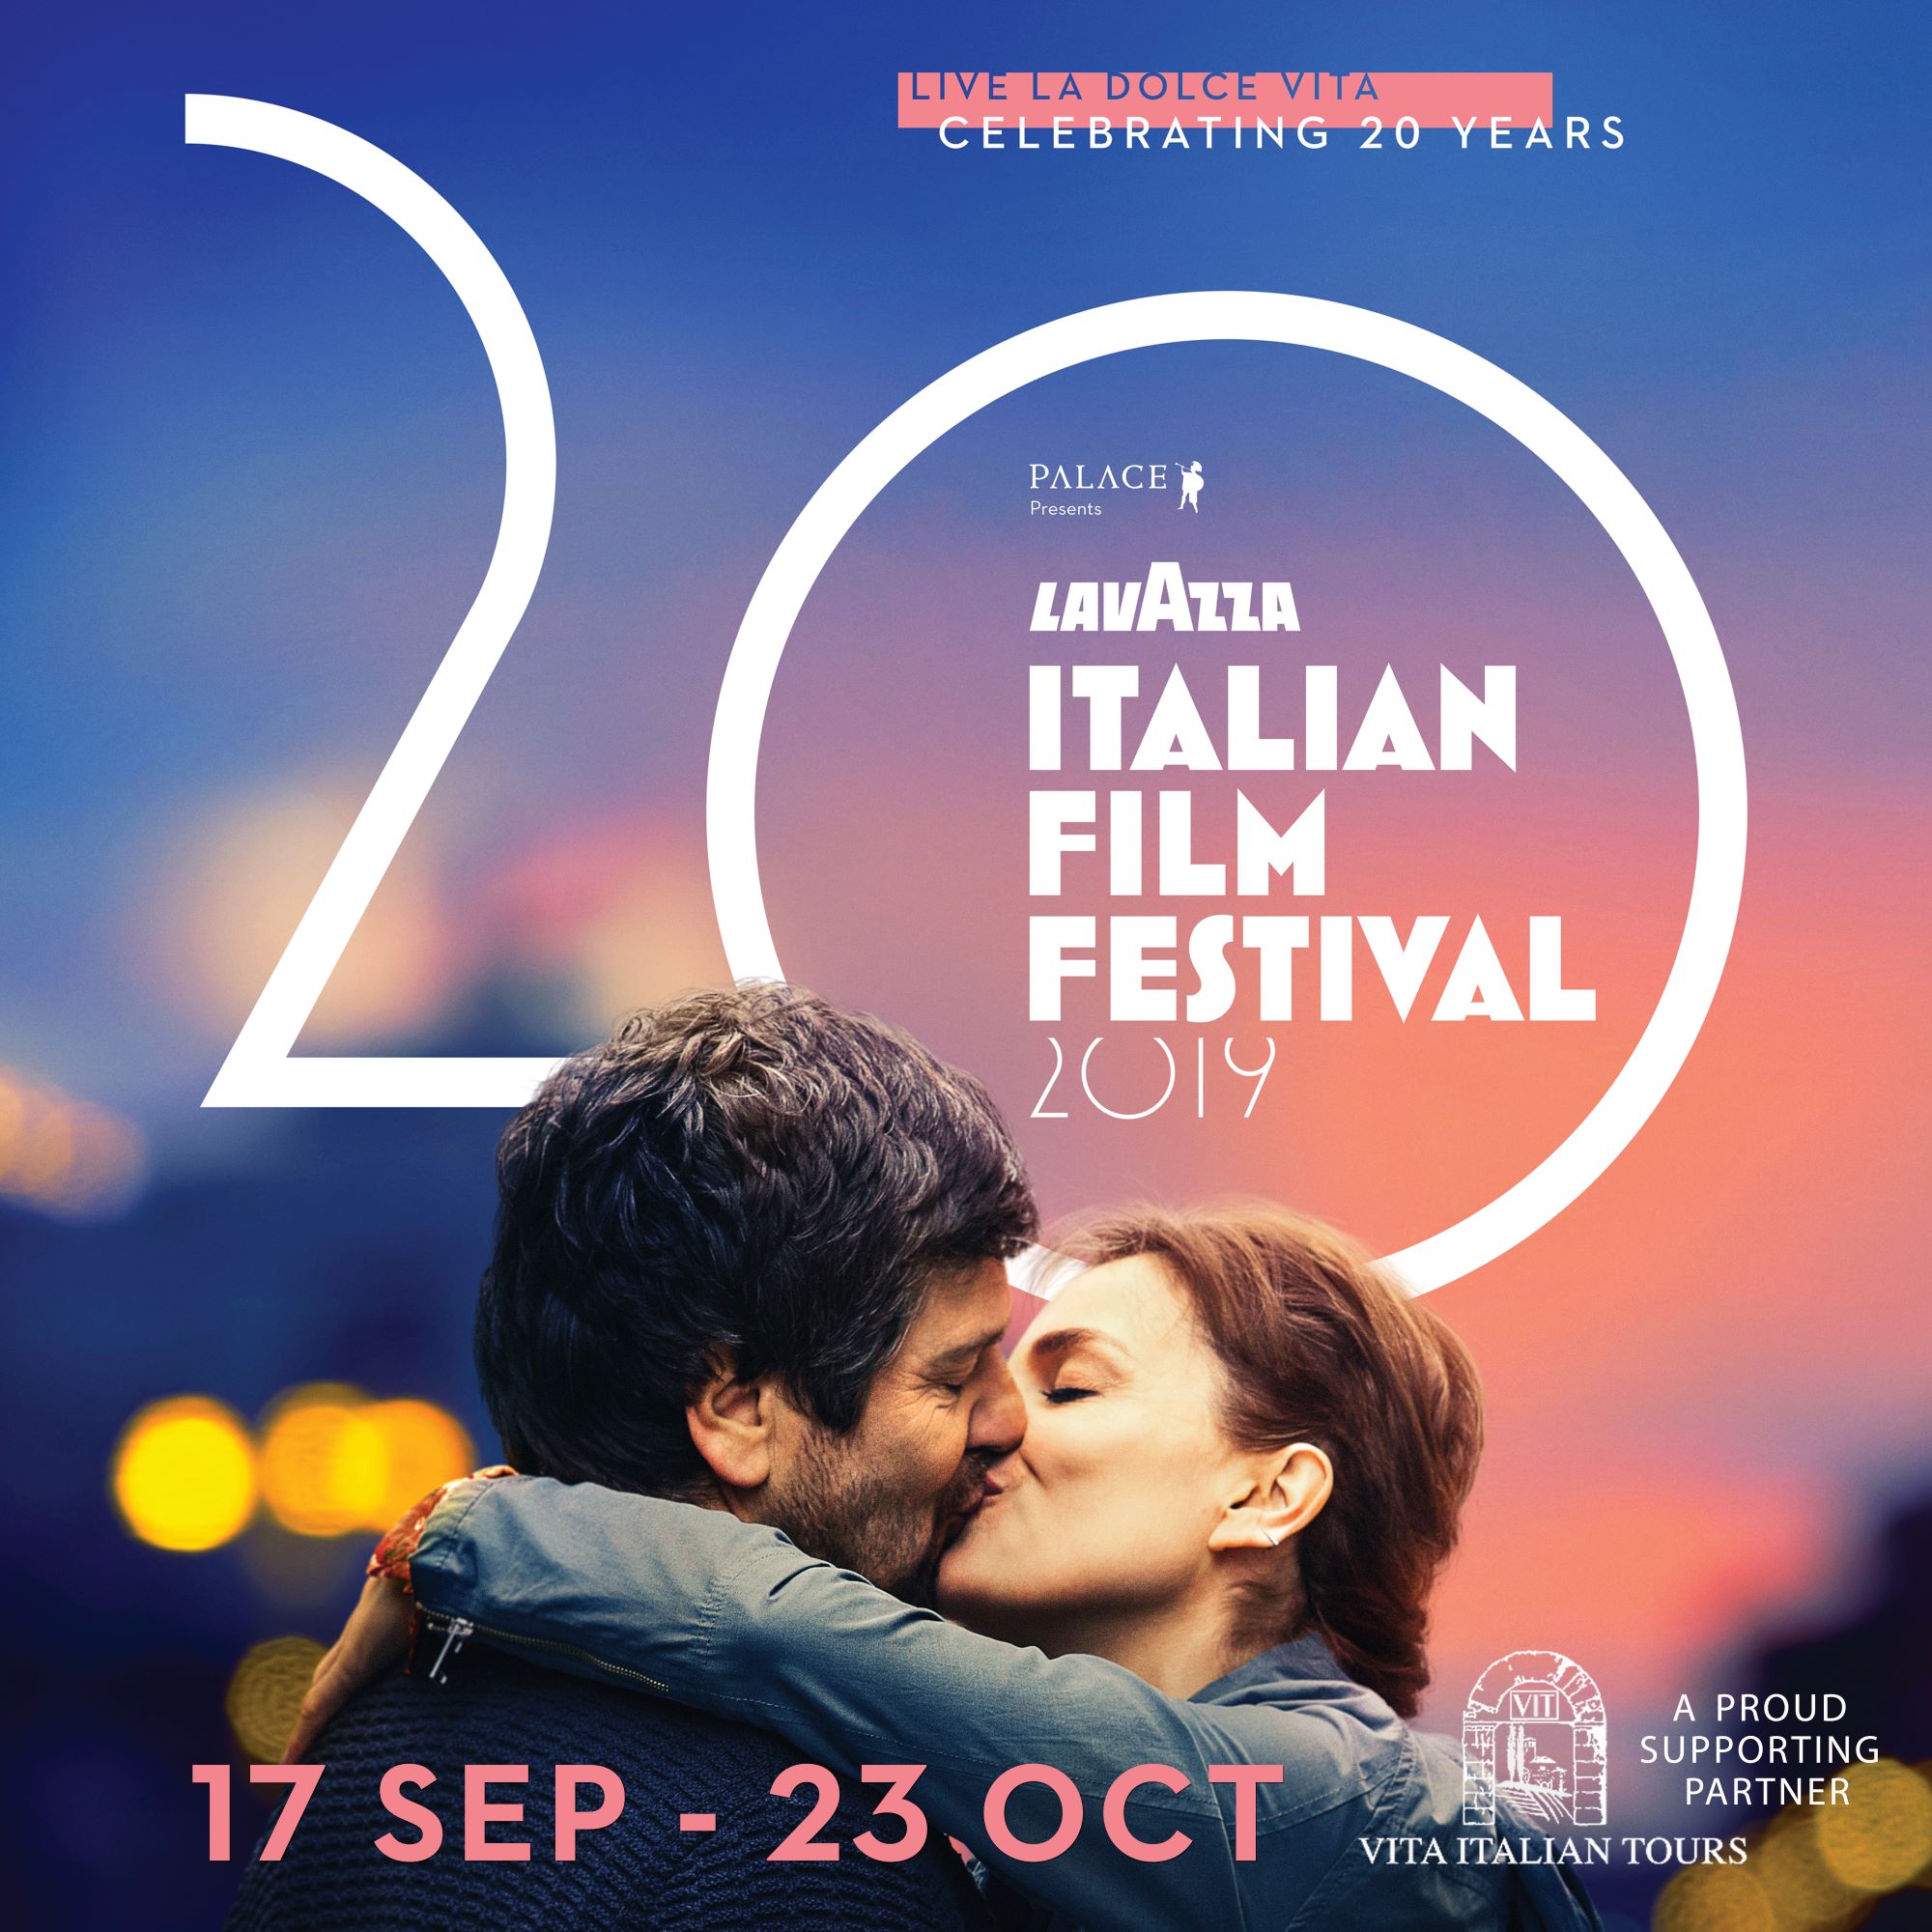 Lavazza Italian Film Festival Vita Italian Tours